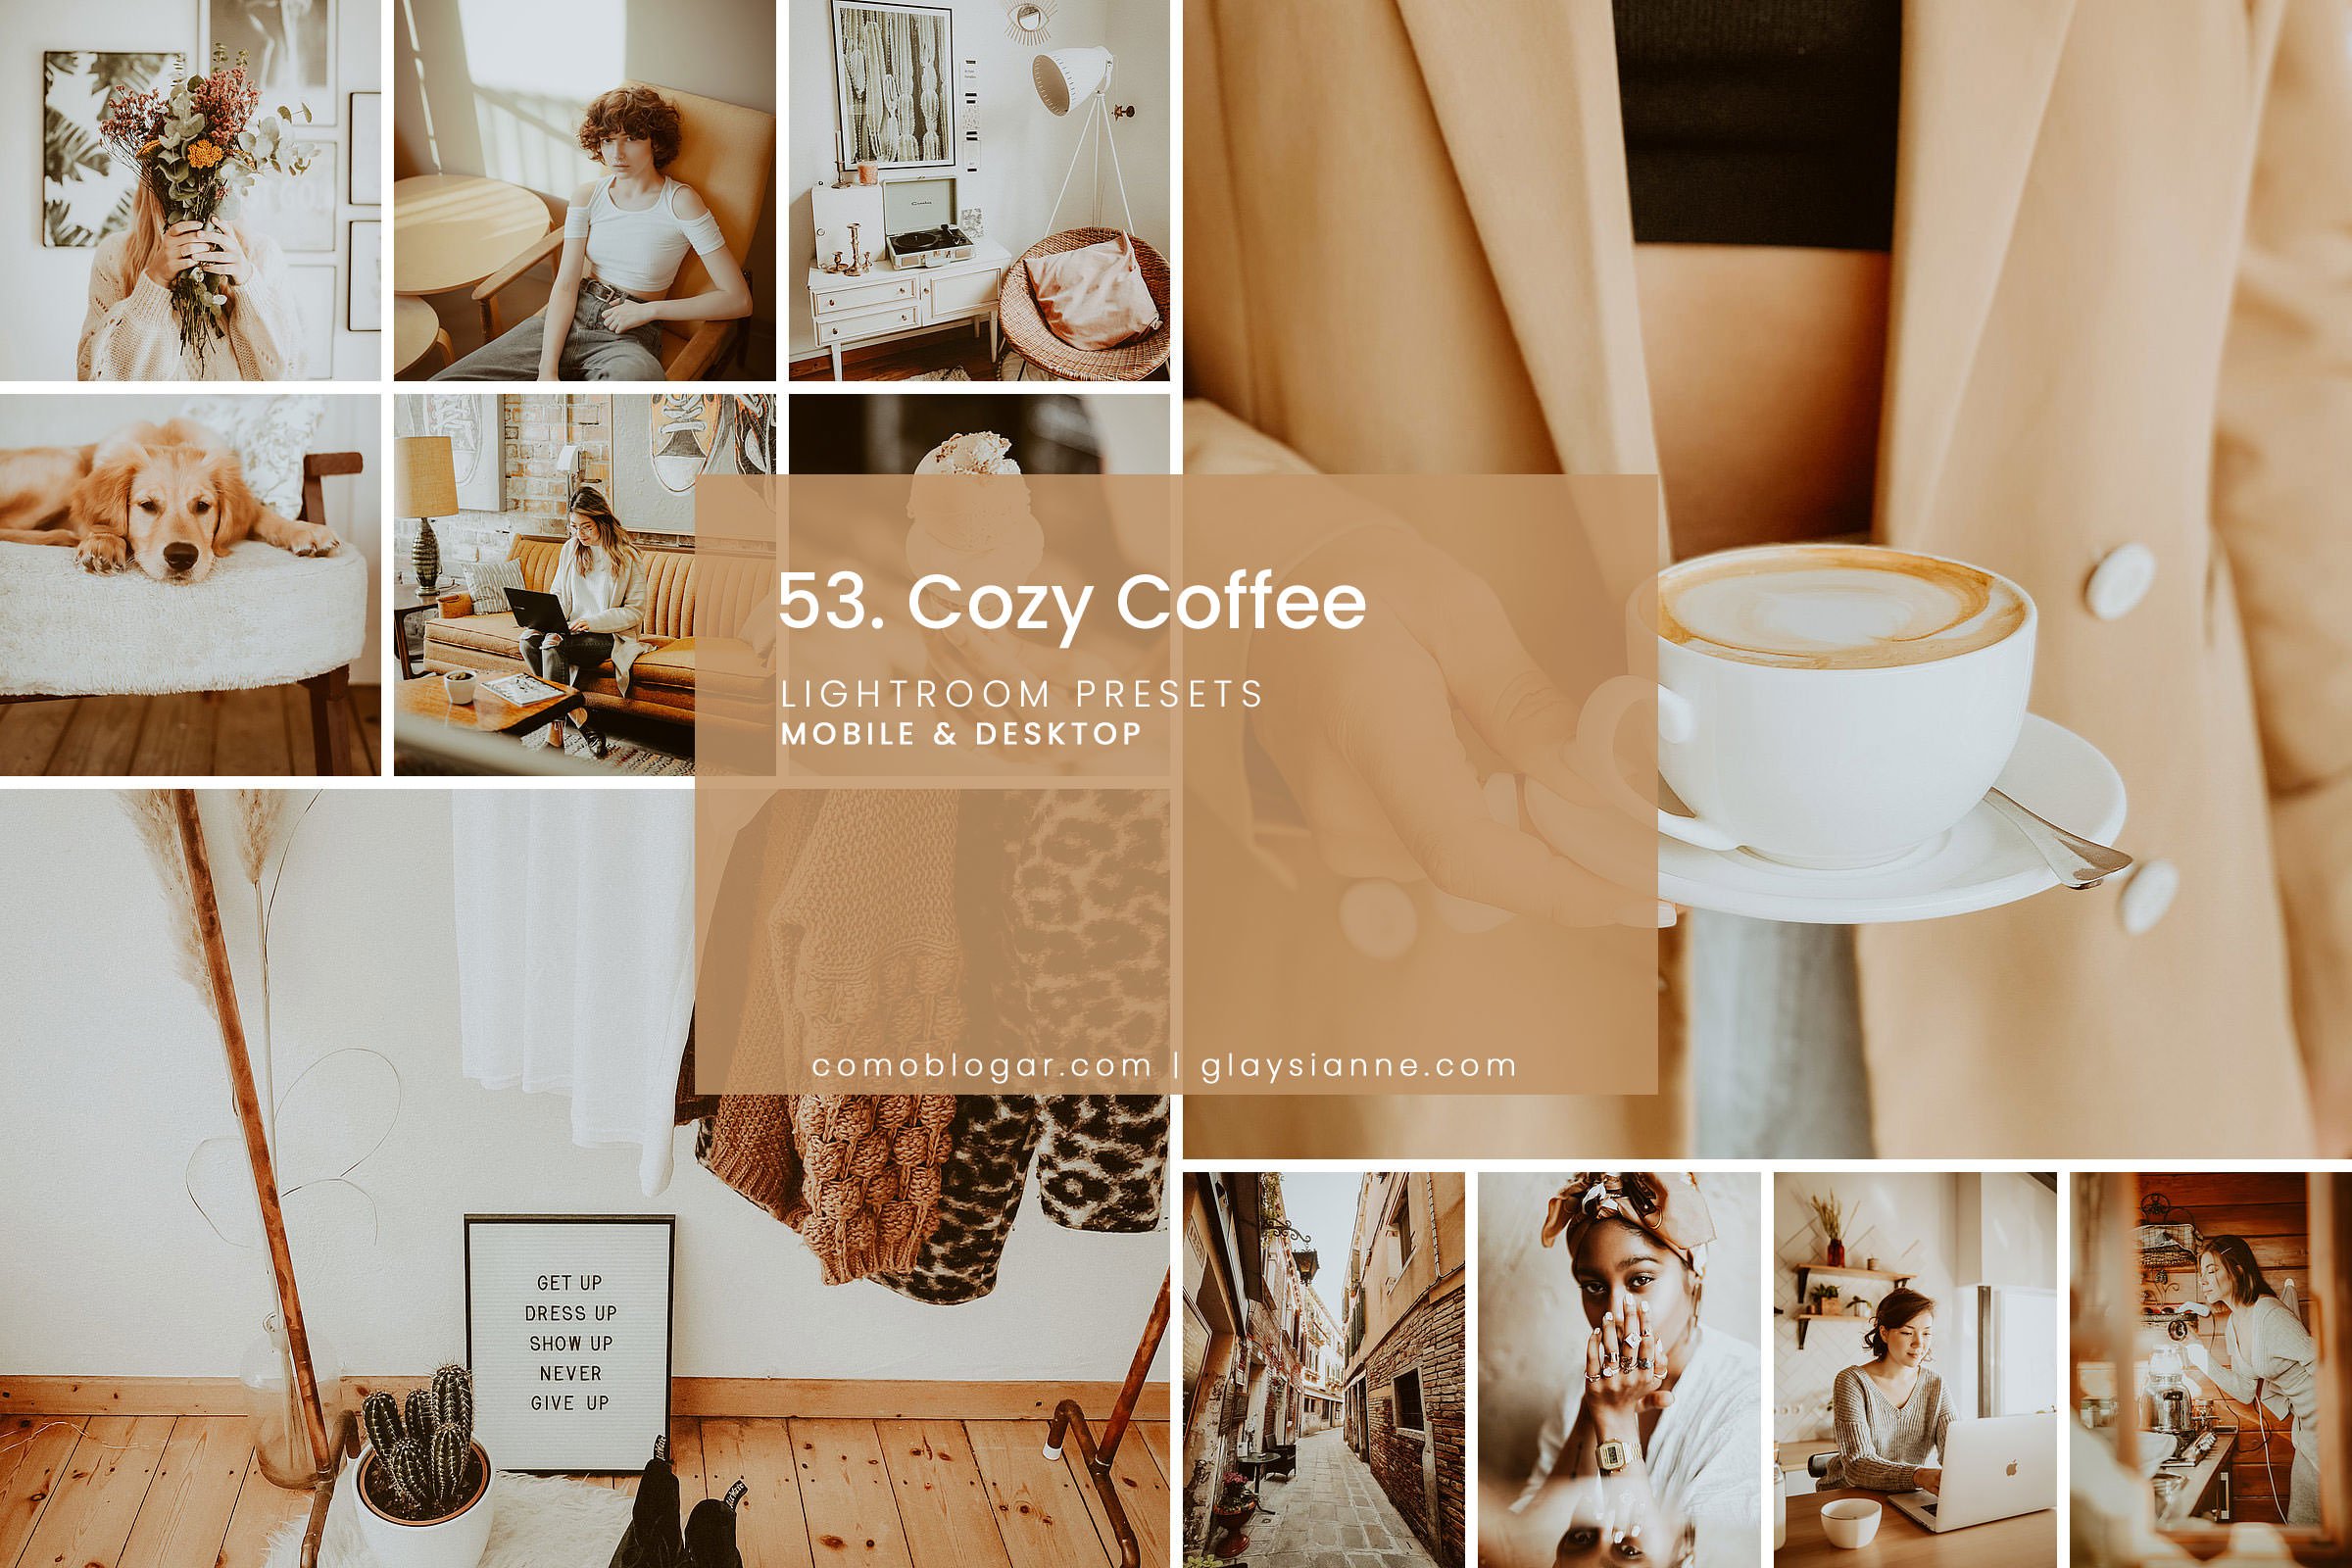 53. Cozy Coffeecover image.